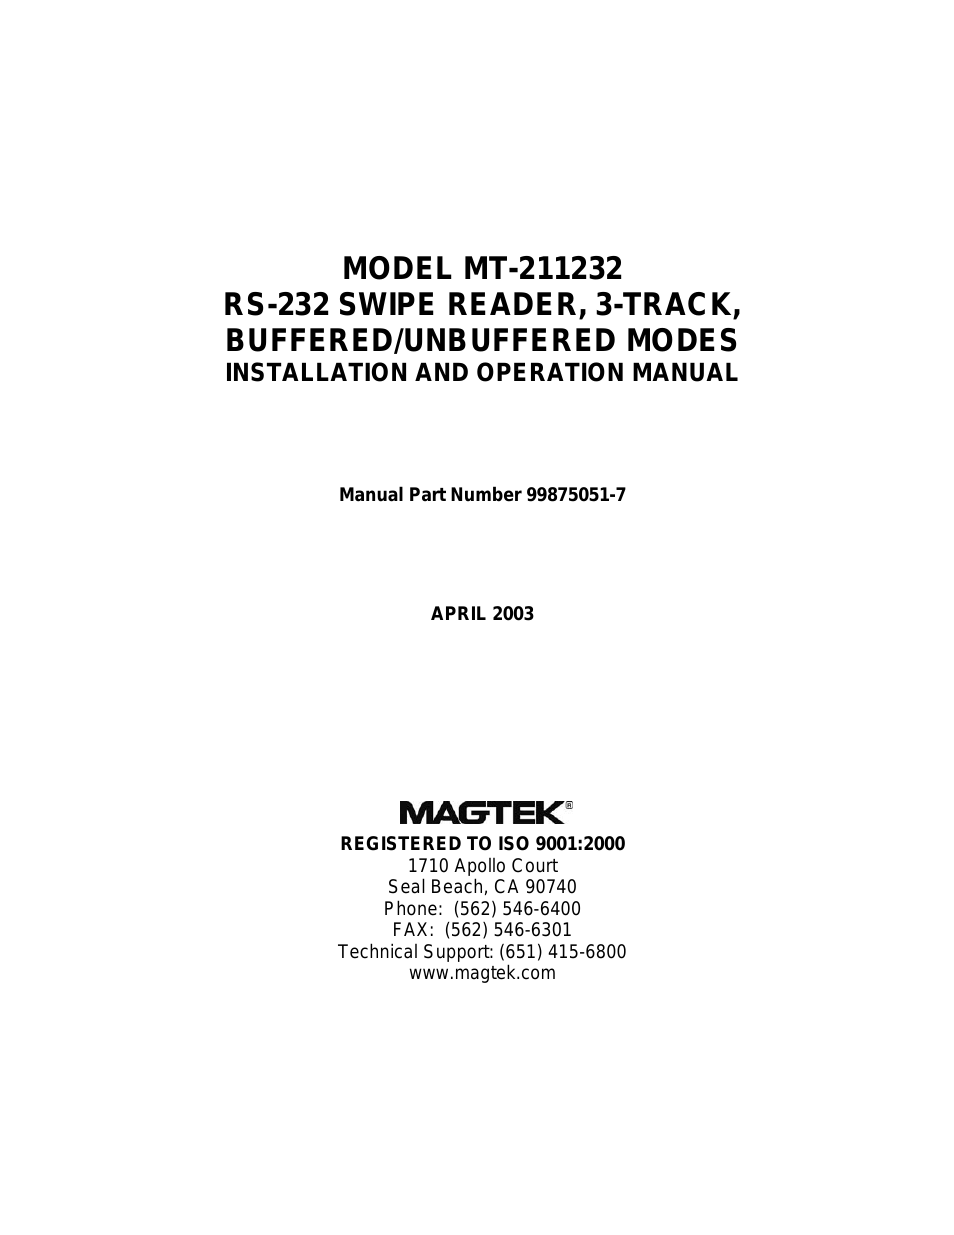 MT-211232 RS-232 3-TRACK